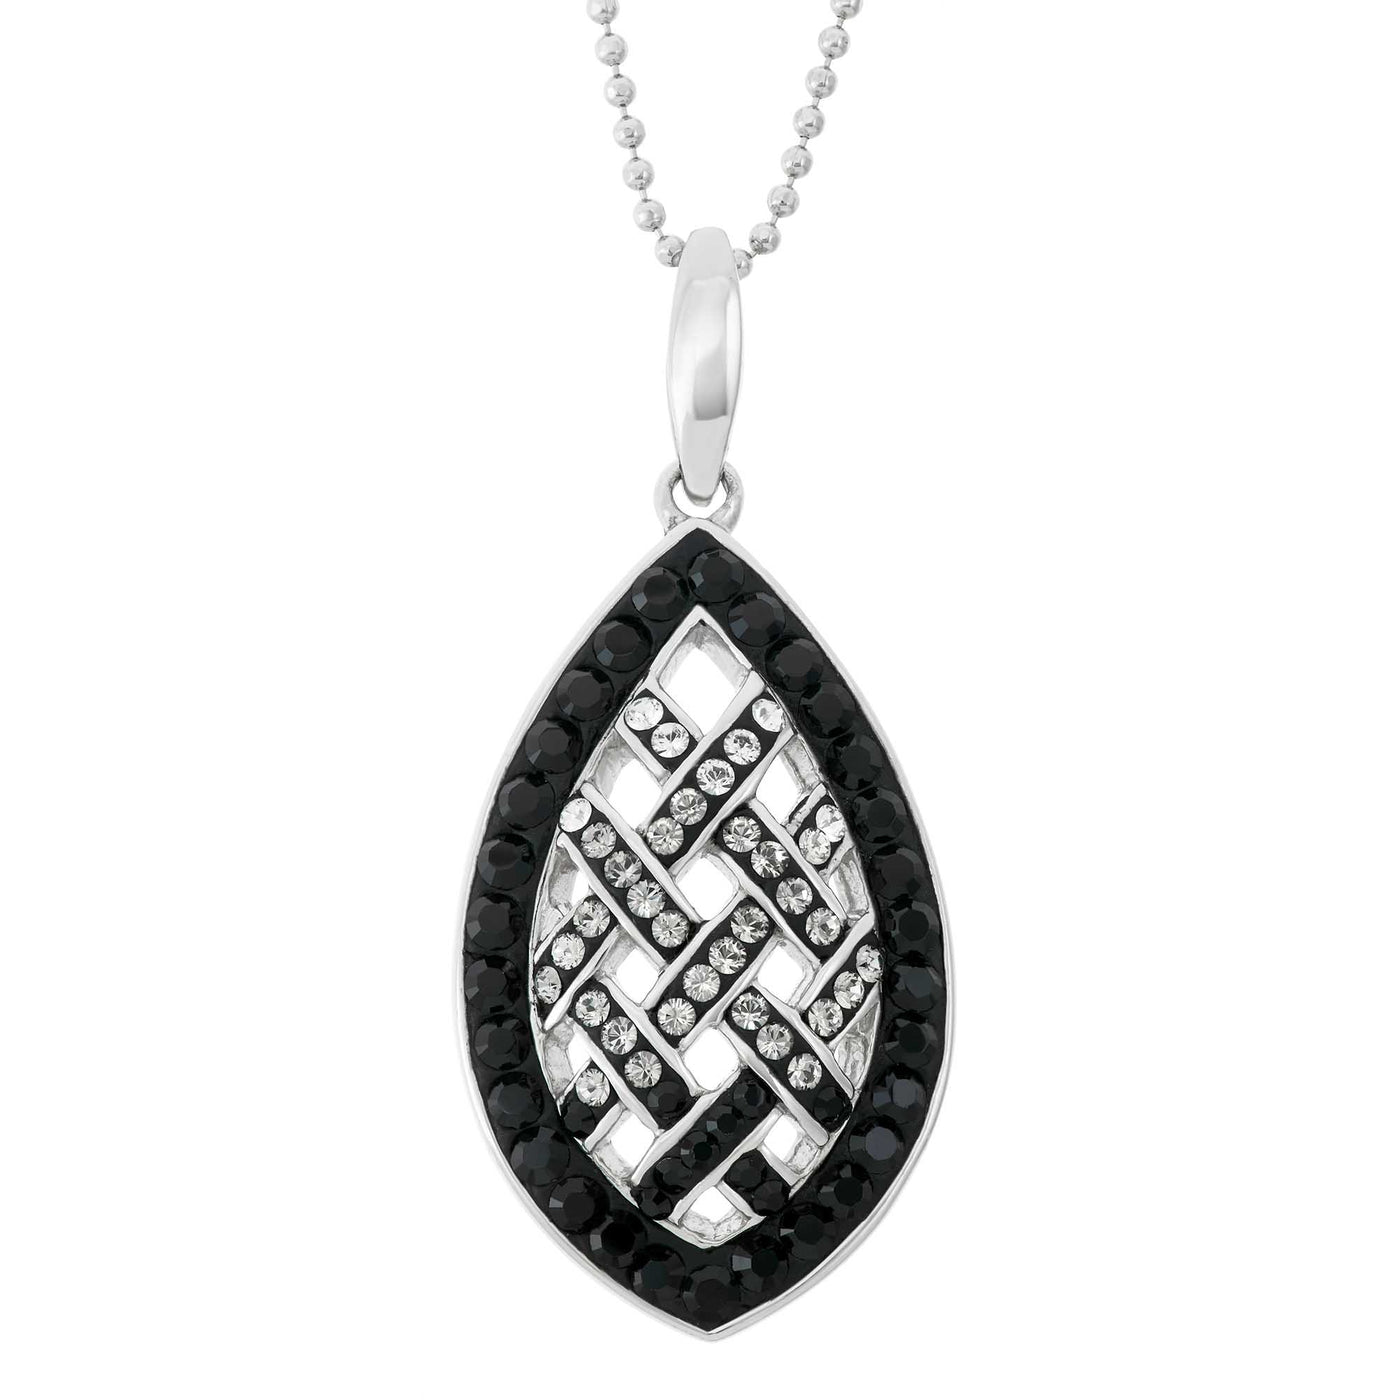 Rebecca Sloane Silver Elliptical and Black Pave Crystal Pendant